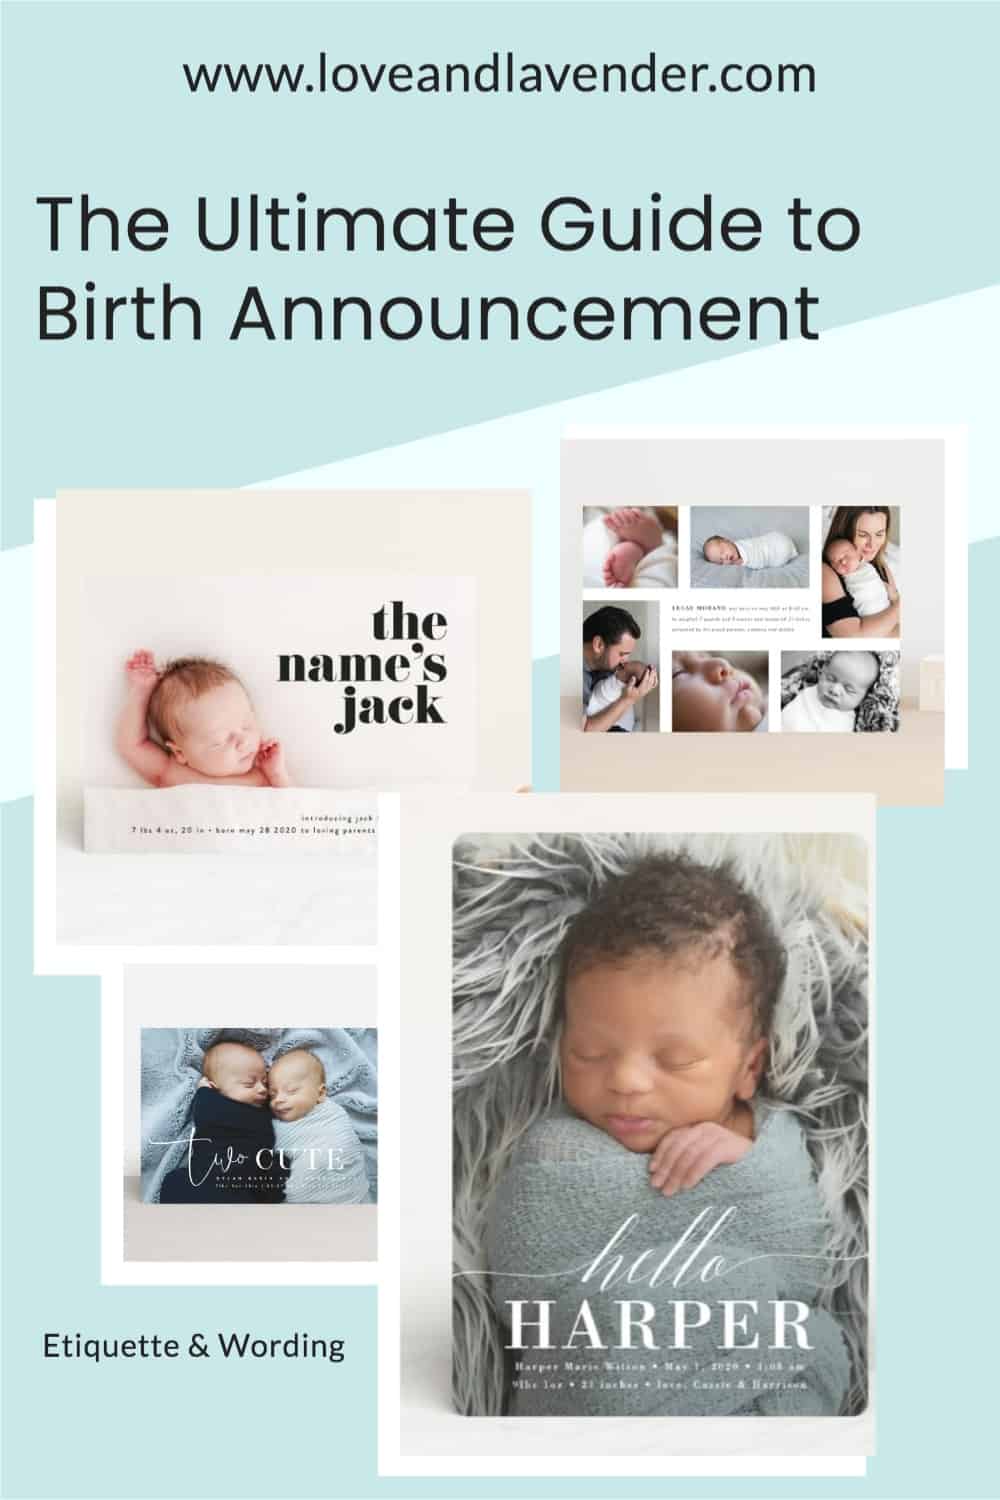 pinterest pin - birth announcement wording and etiquette